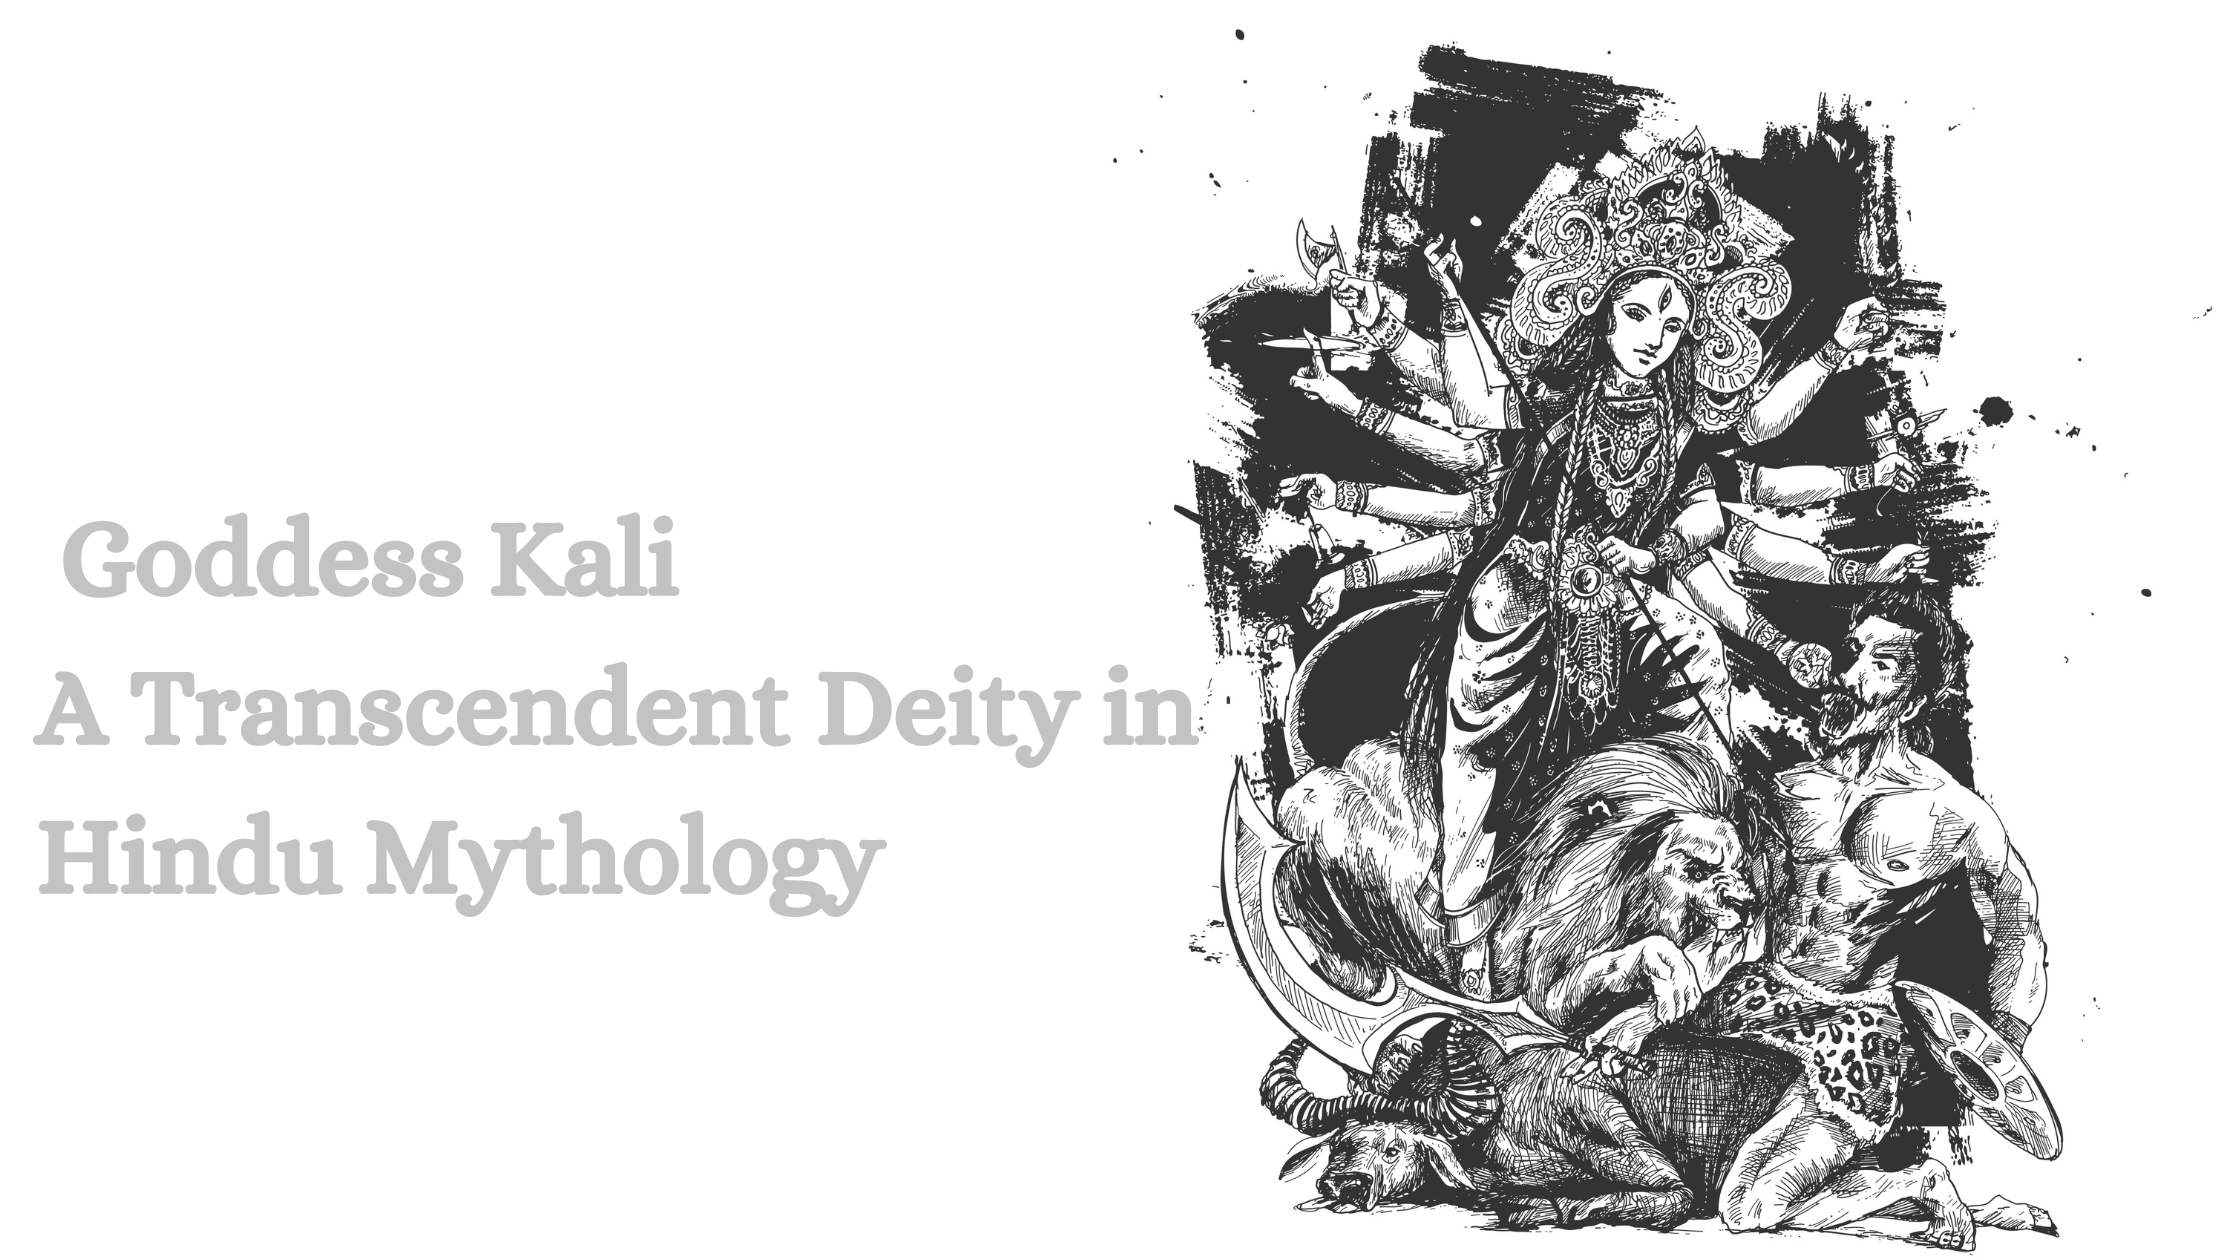 Story of Goddess Kali- A Transcendent Deity